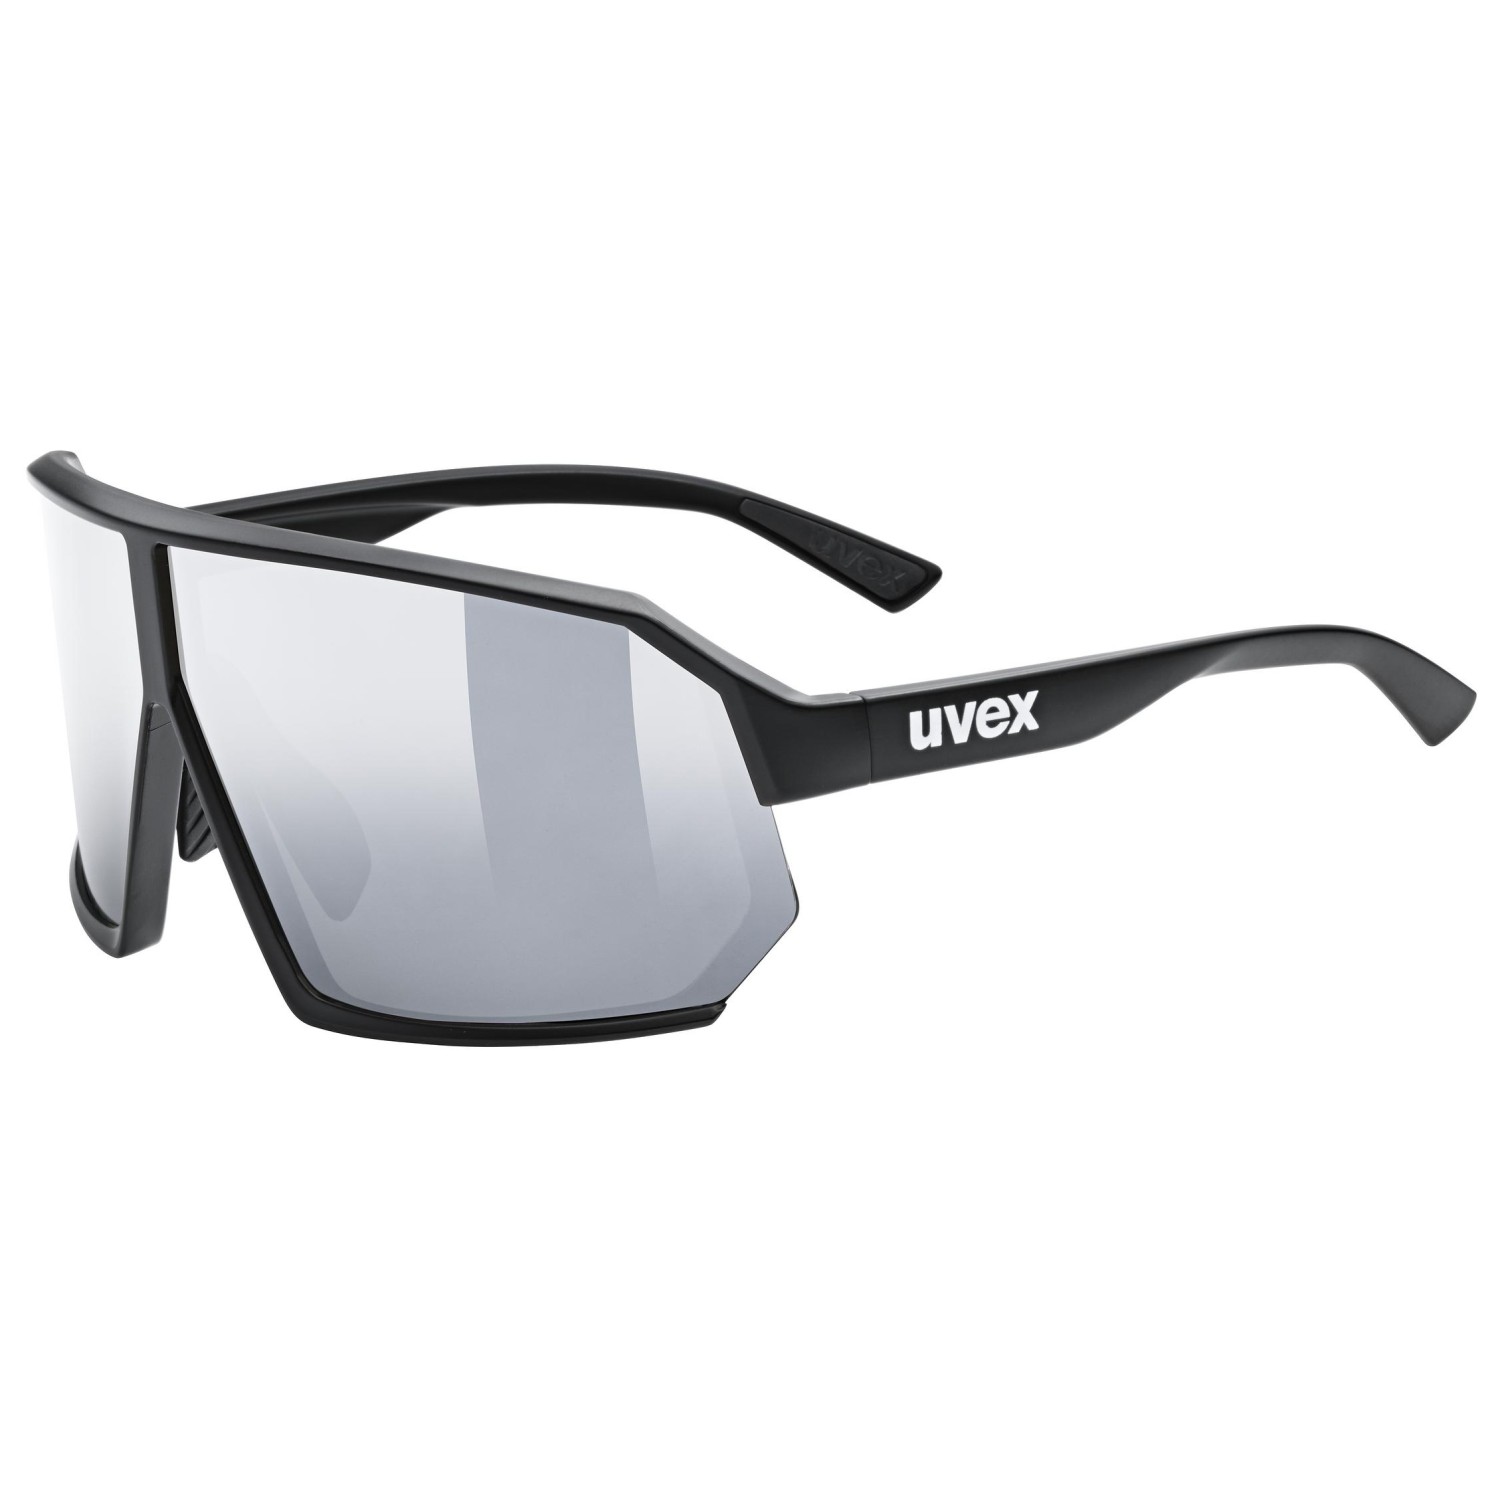 Солнцезащитные очки Uvex Sportstyle 237 Mirror Cat 3, цвет Black Mat солнцезащитные очки uvex lgl 39 mirror cat 3 цвет grey mat blue